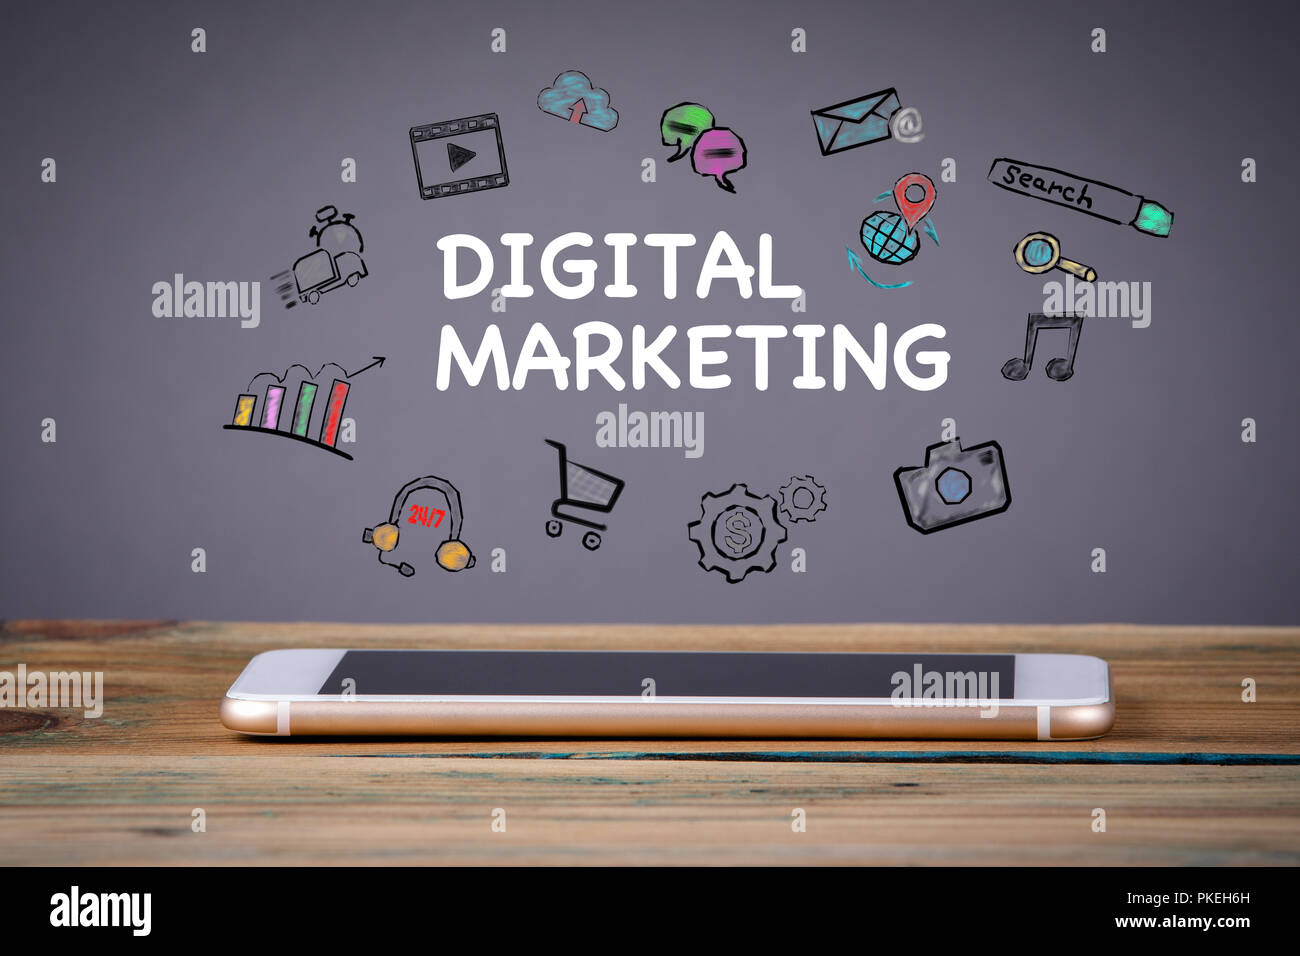 Digital Marketing, Media Technology concept Stock Photo